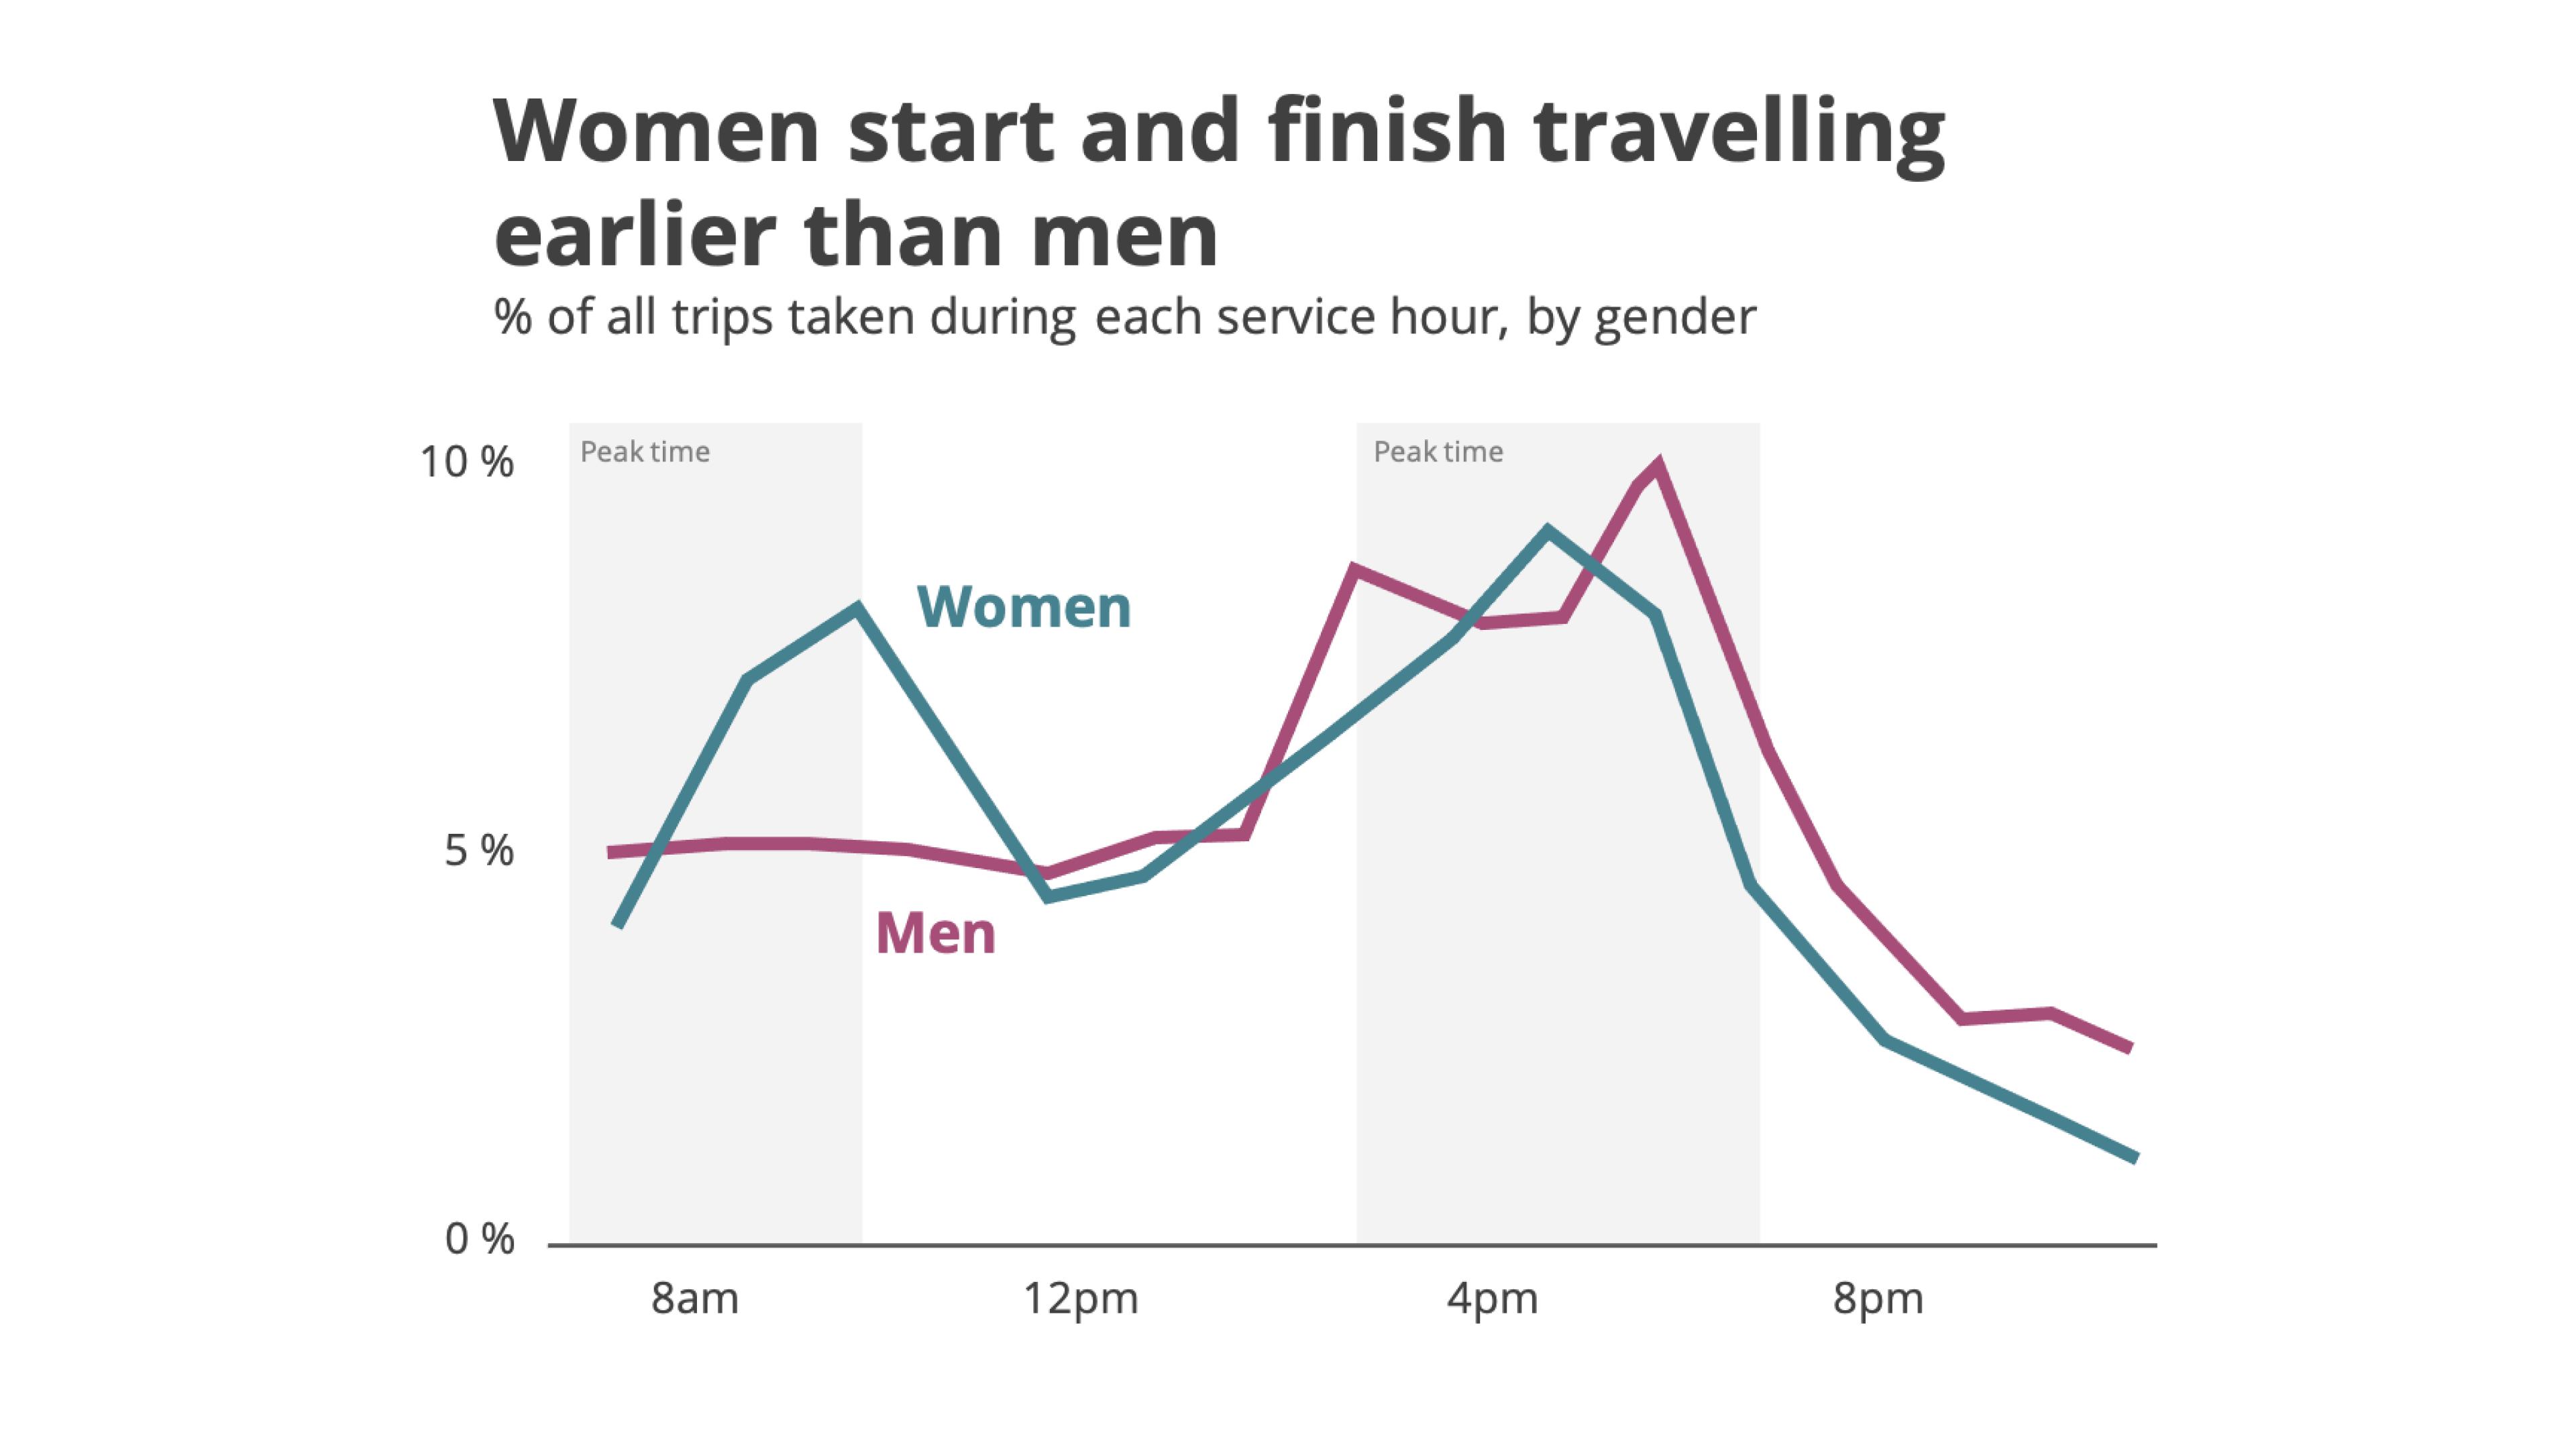 Women start and finish traveling earlier than men